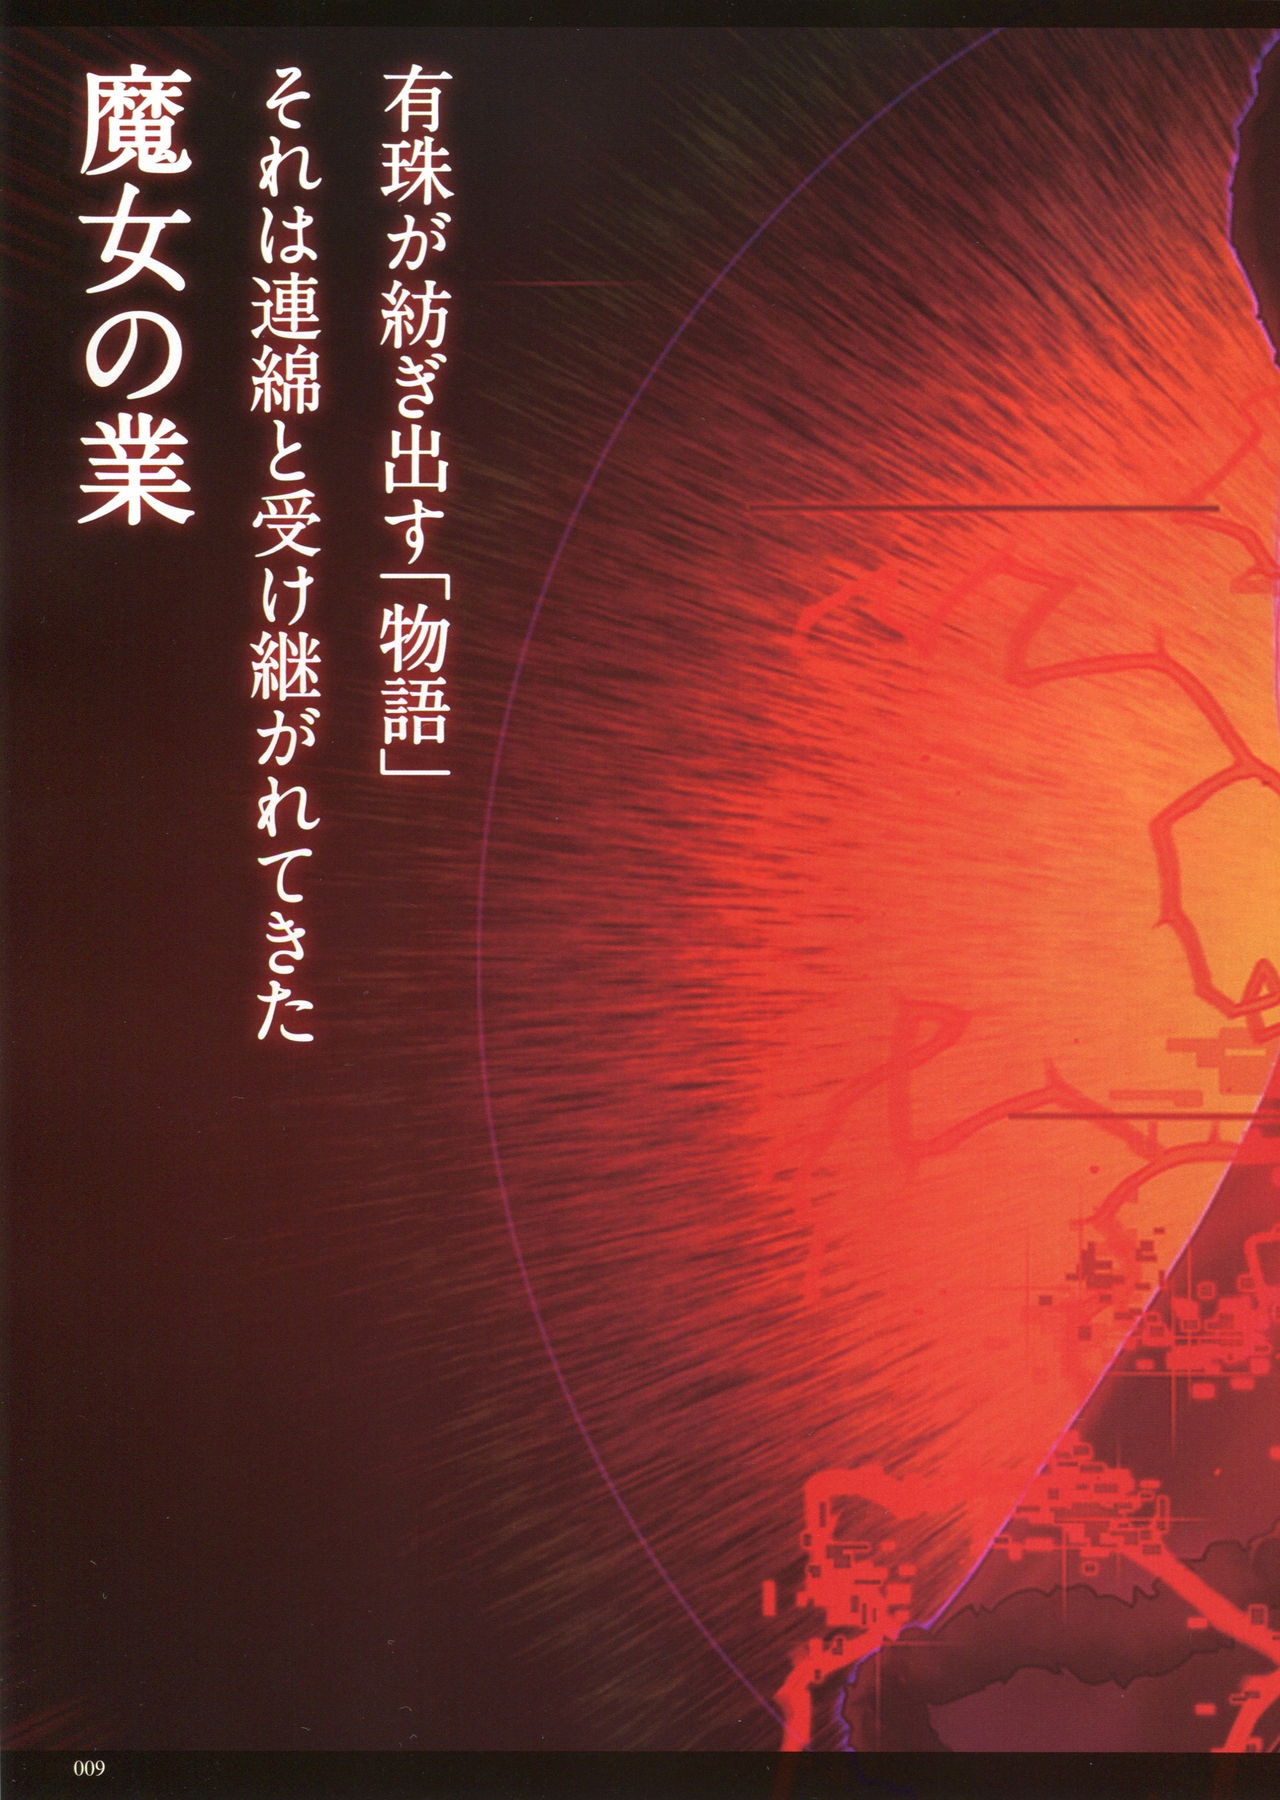 Witch On the Holy Night &Mahoutsukai no Yoru「STARTER VISUAL BOOK」COMP1204 8